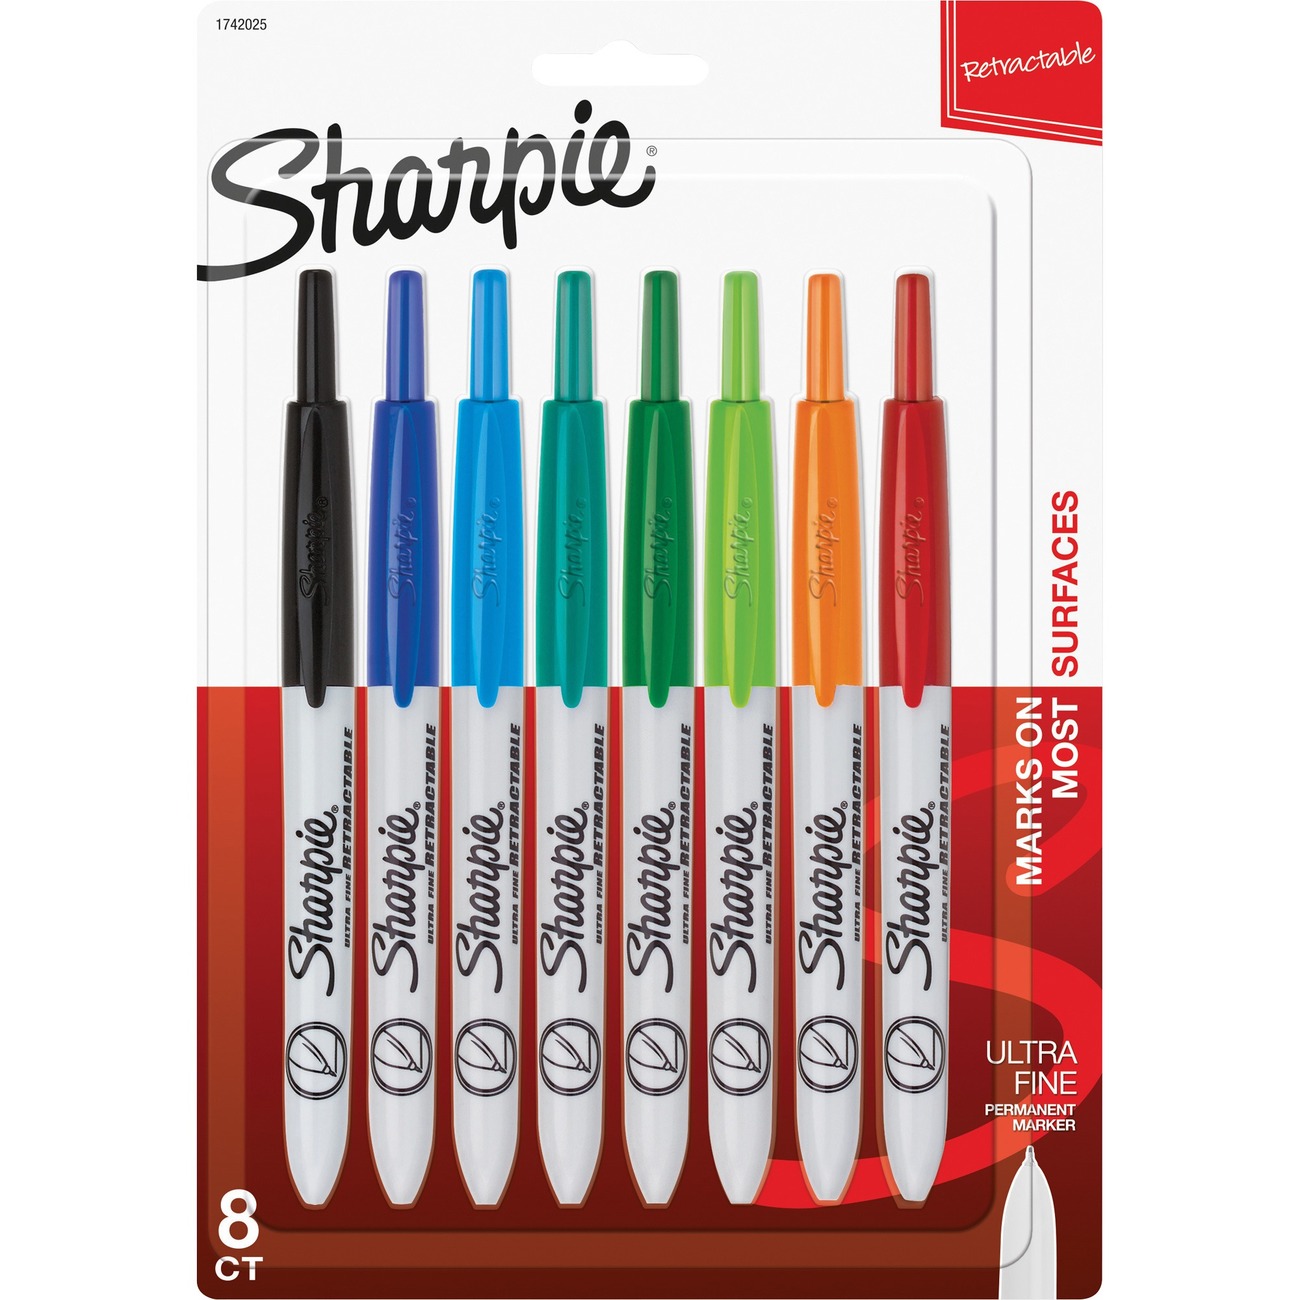 Sharpie Mystic Gems Permanent Marker, Ultra Fine - 5 markers